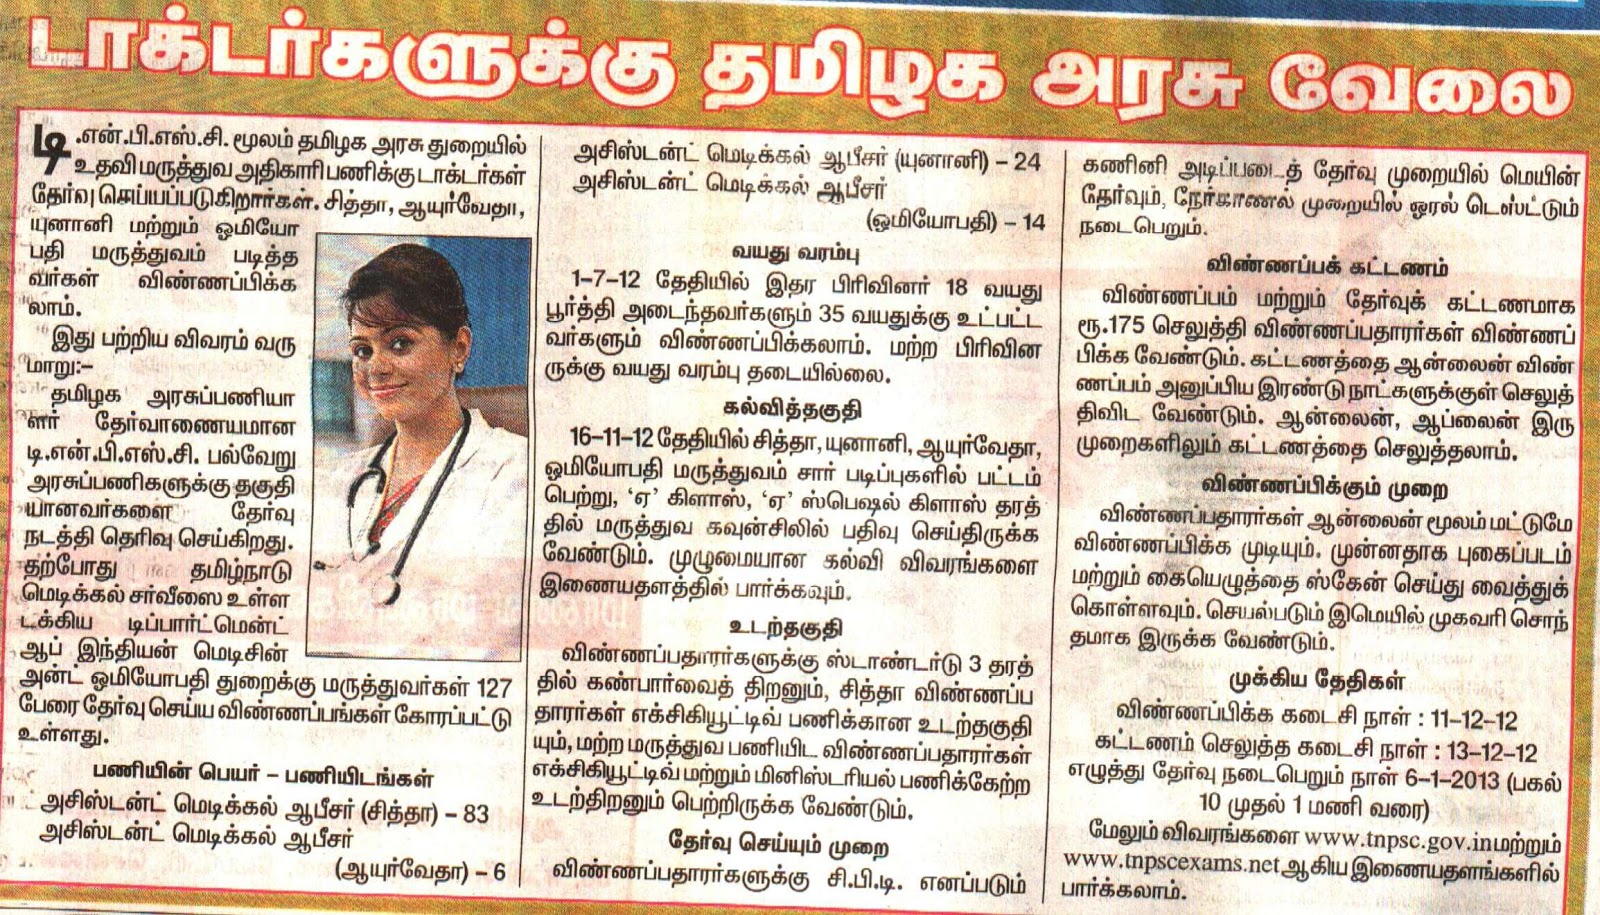 Government job exams in tamilnadu 2012